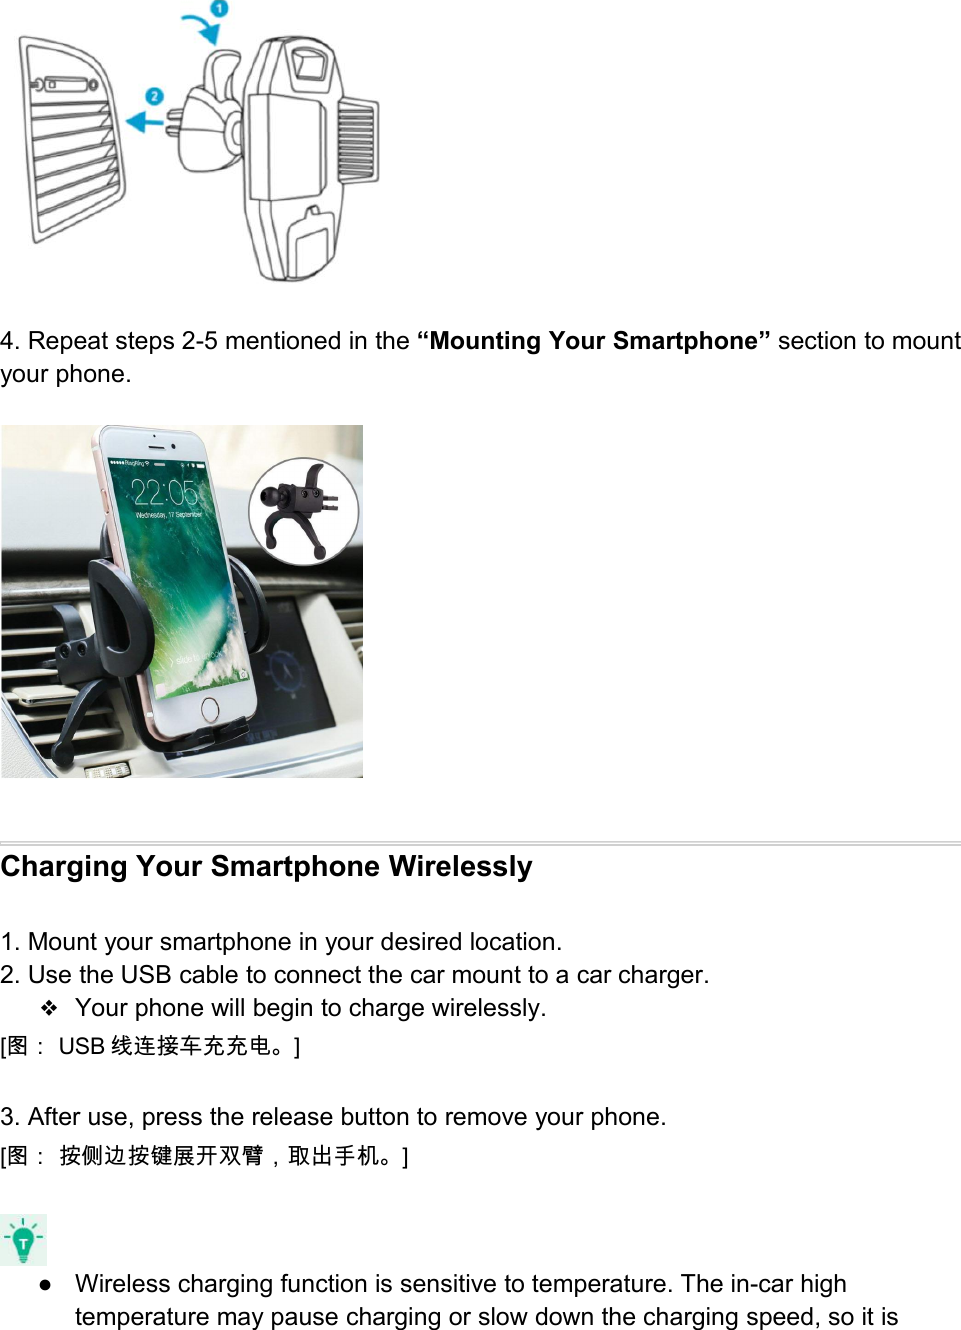        “Mounting Your Smartphone”    Charging Your Smartphone Wirelessly                    ❖      [图： USB 线连接车充充电。]          [图： 按侧边按键展开双臂，取出手机。]                      